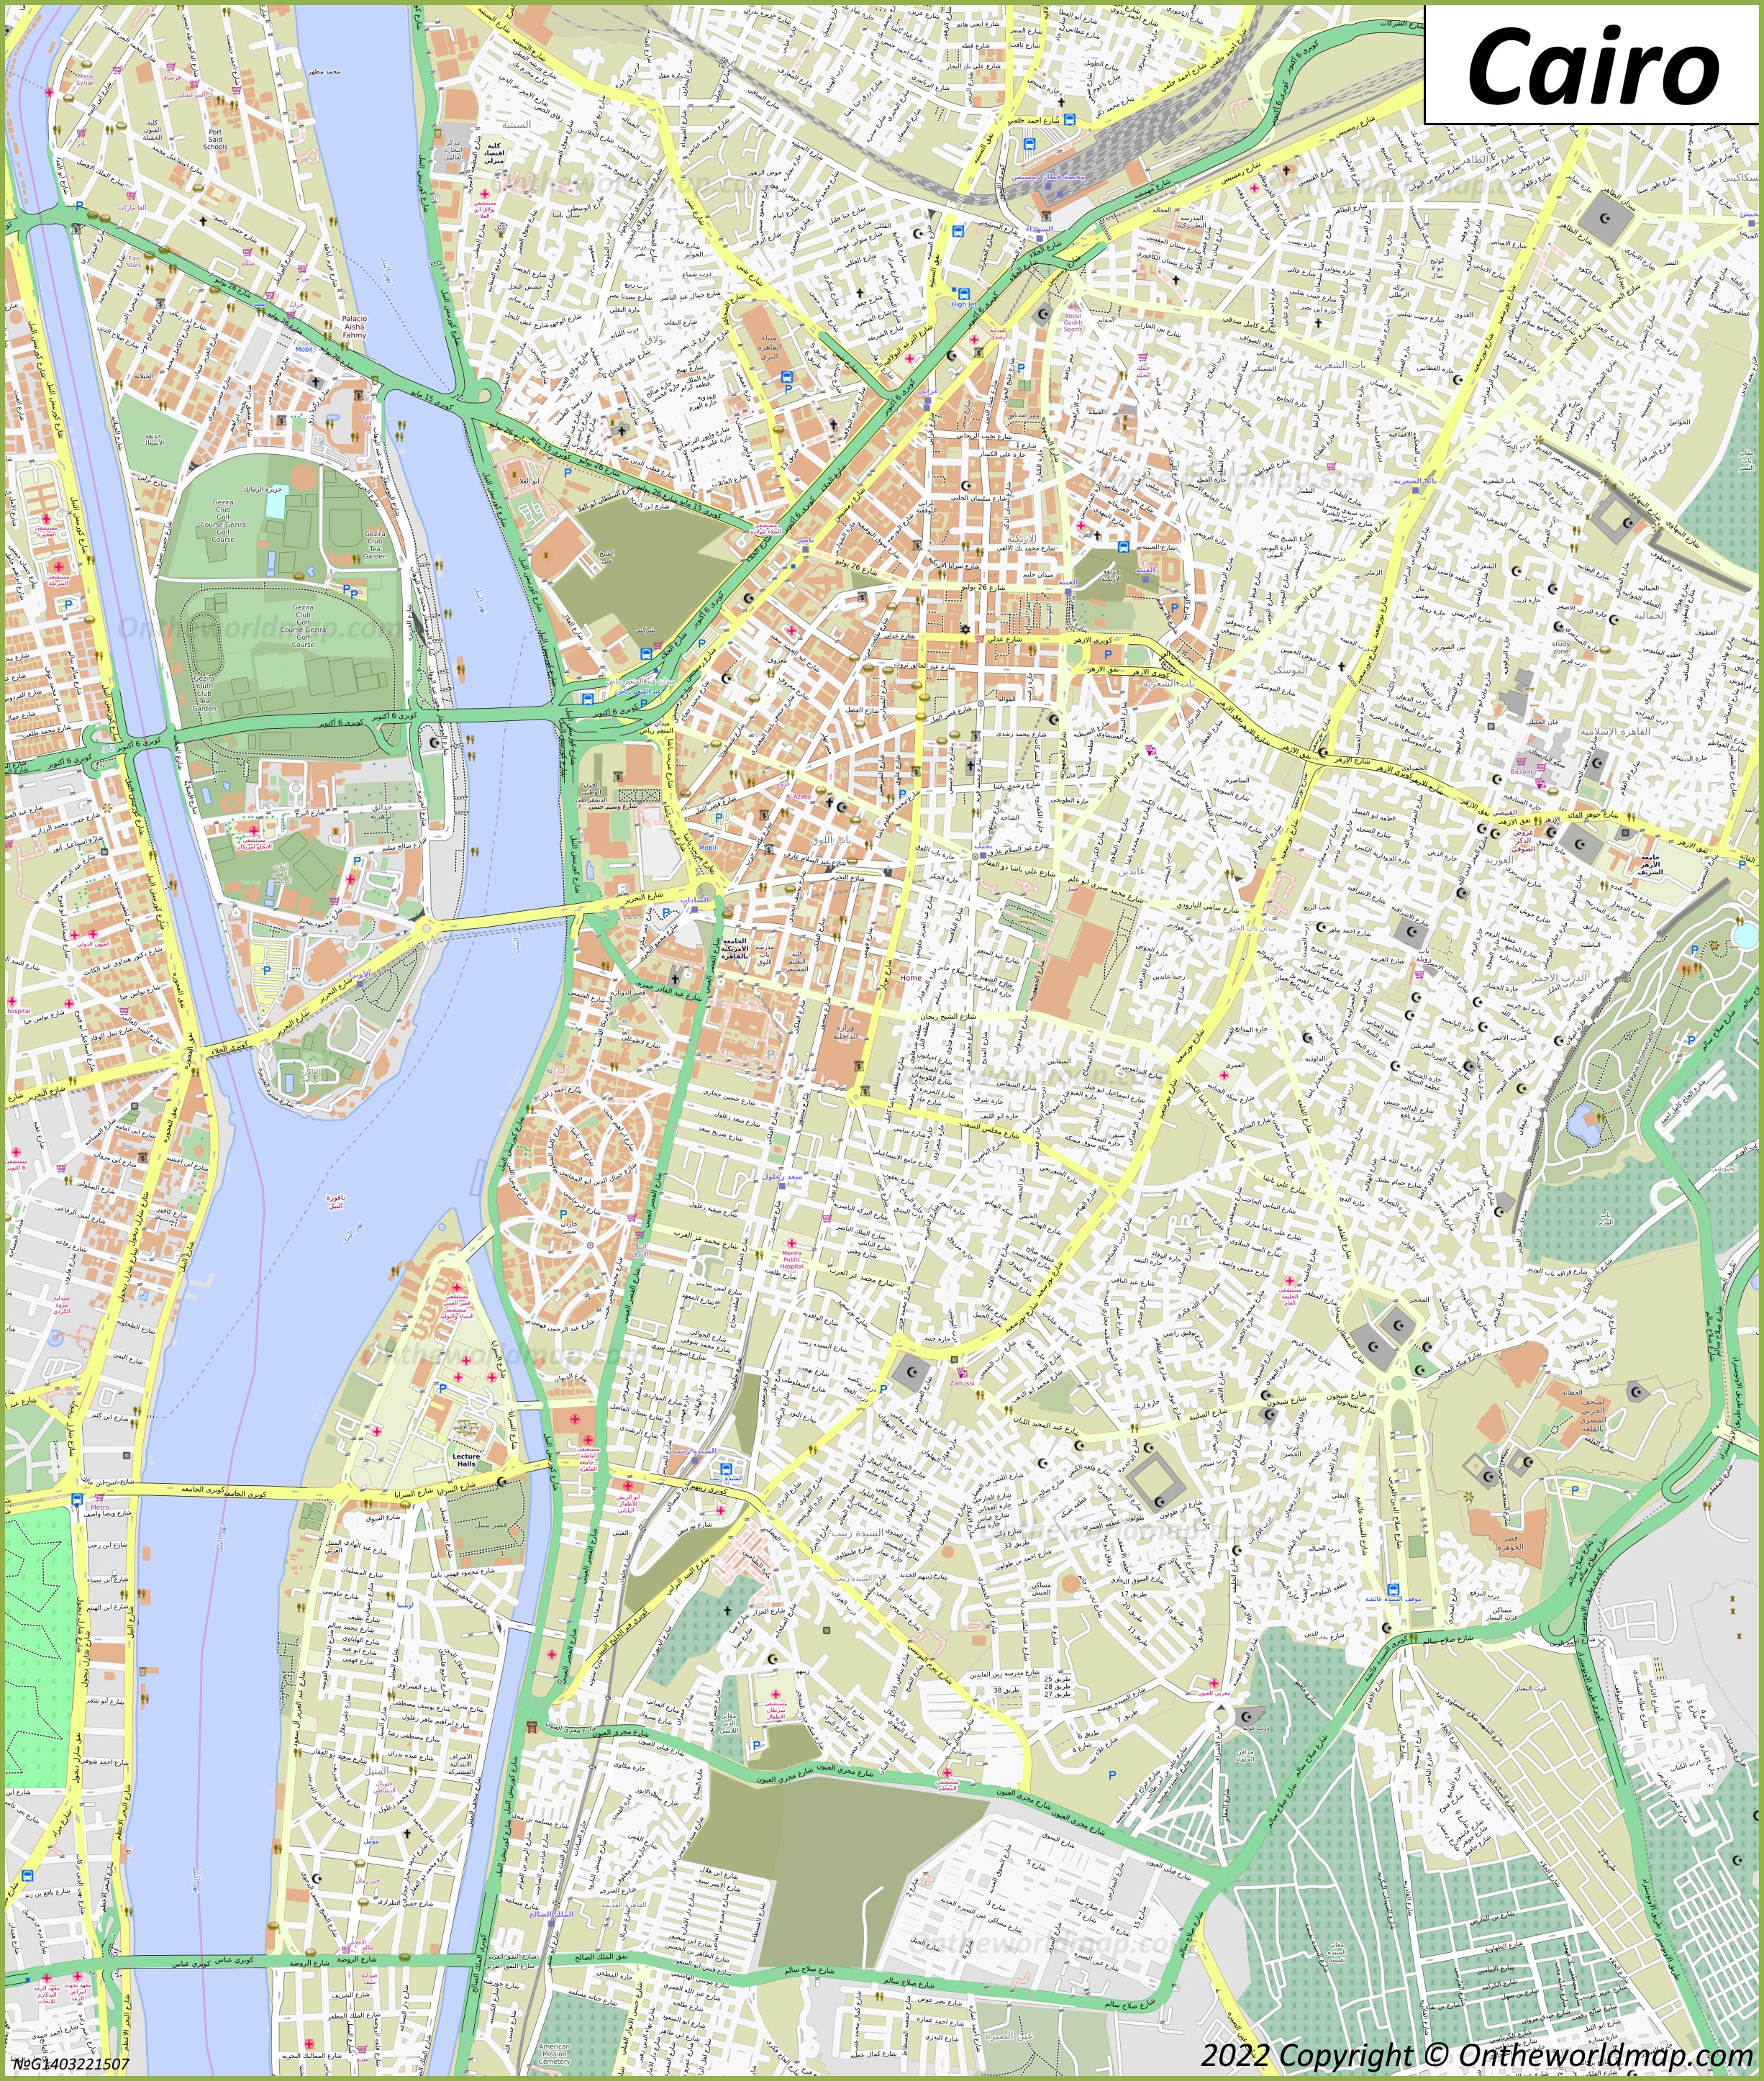 Cairo City Centre Map